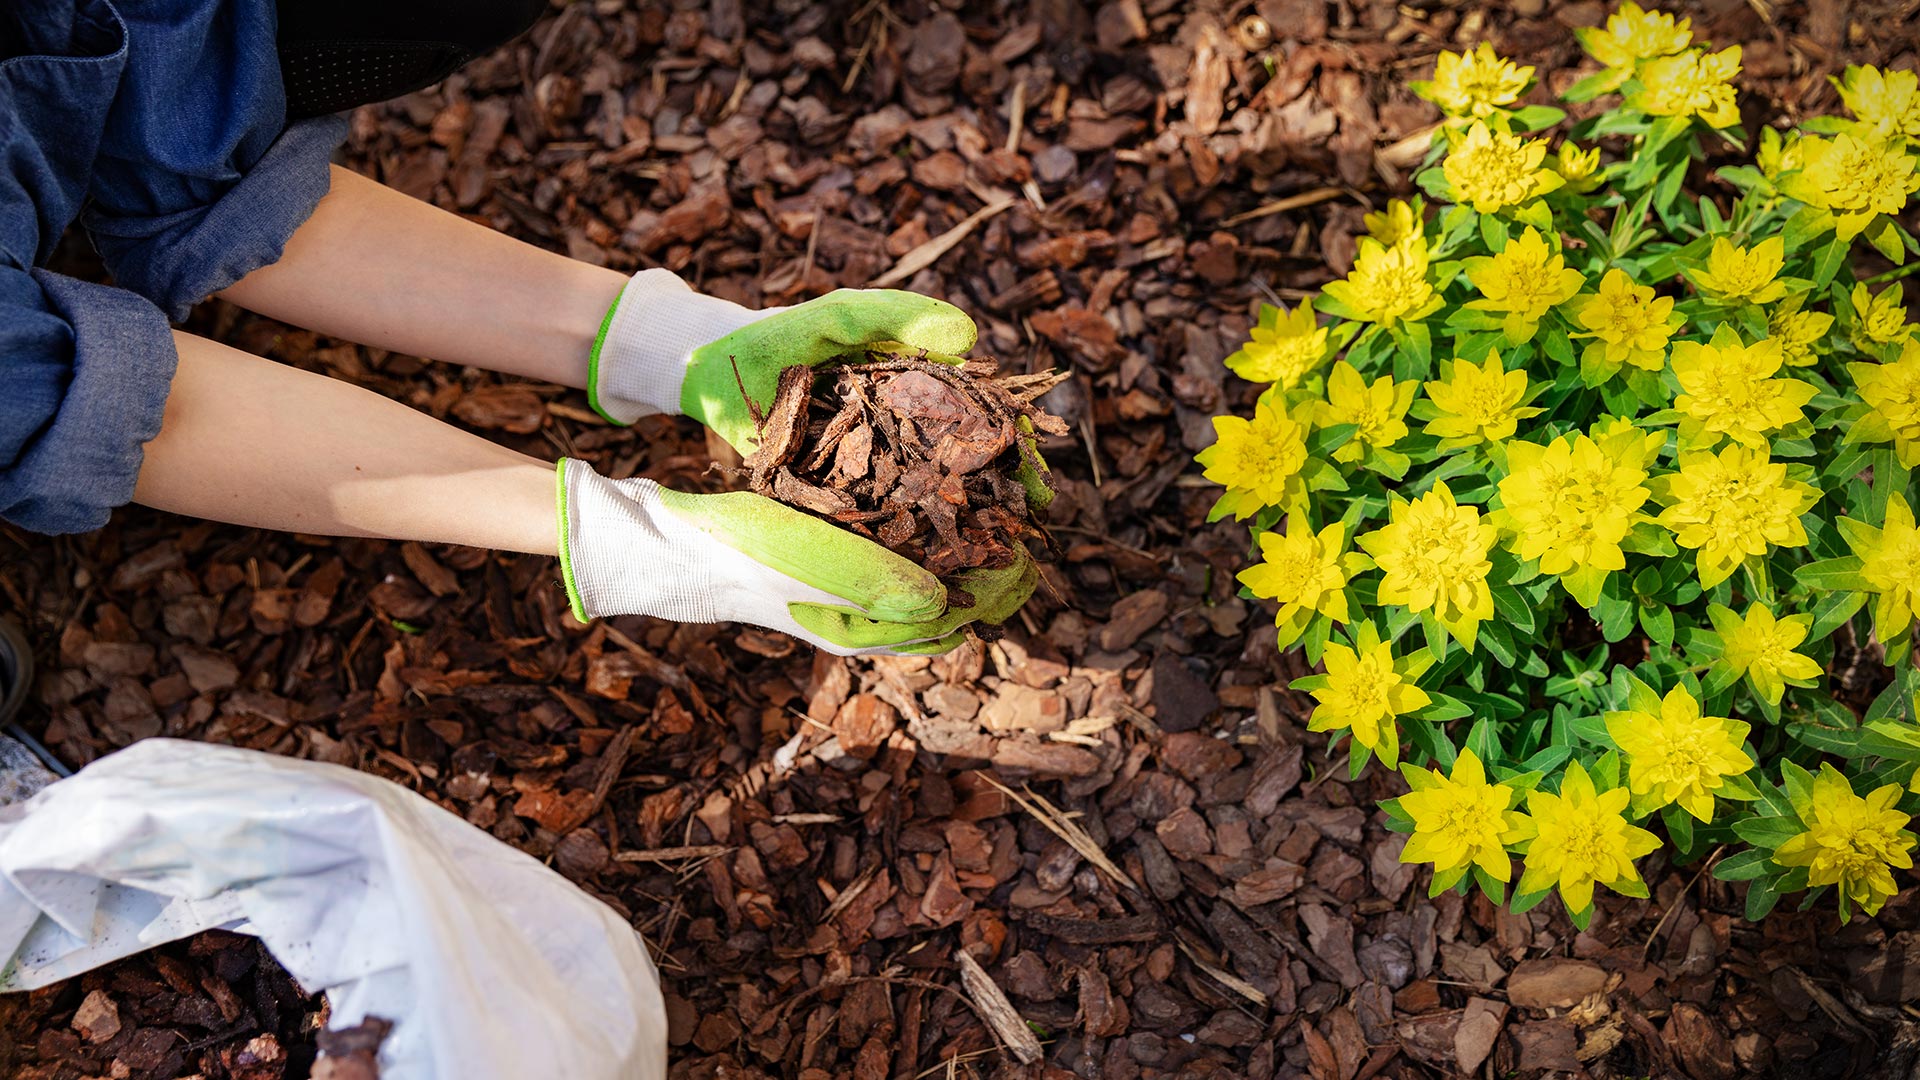 Landscaper installing mulch nearby vibrant yellow flowers in East Lansing, MI.